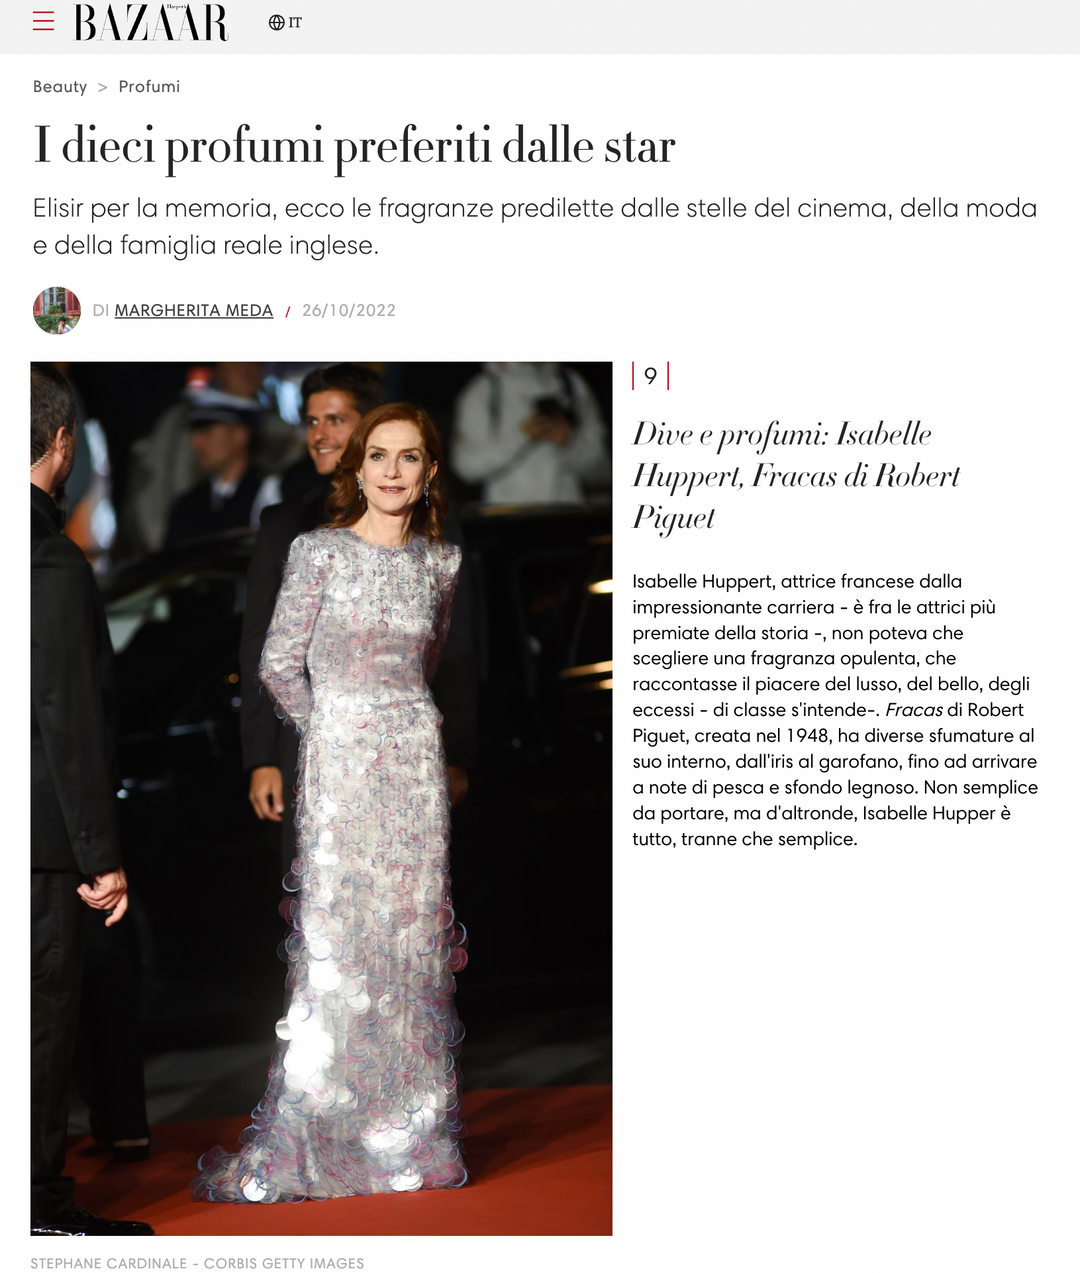 Harper's Bazaar Italy I dieci profumi preferiti dalle star article featuring Isabelle Huppert Fracas